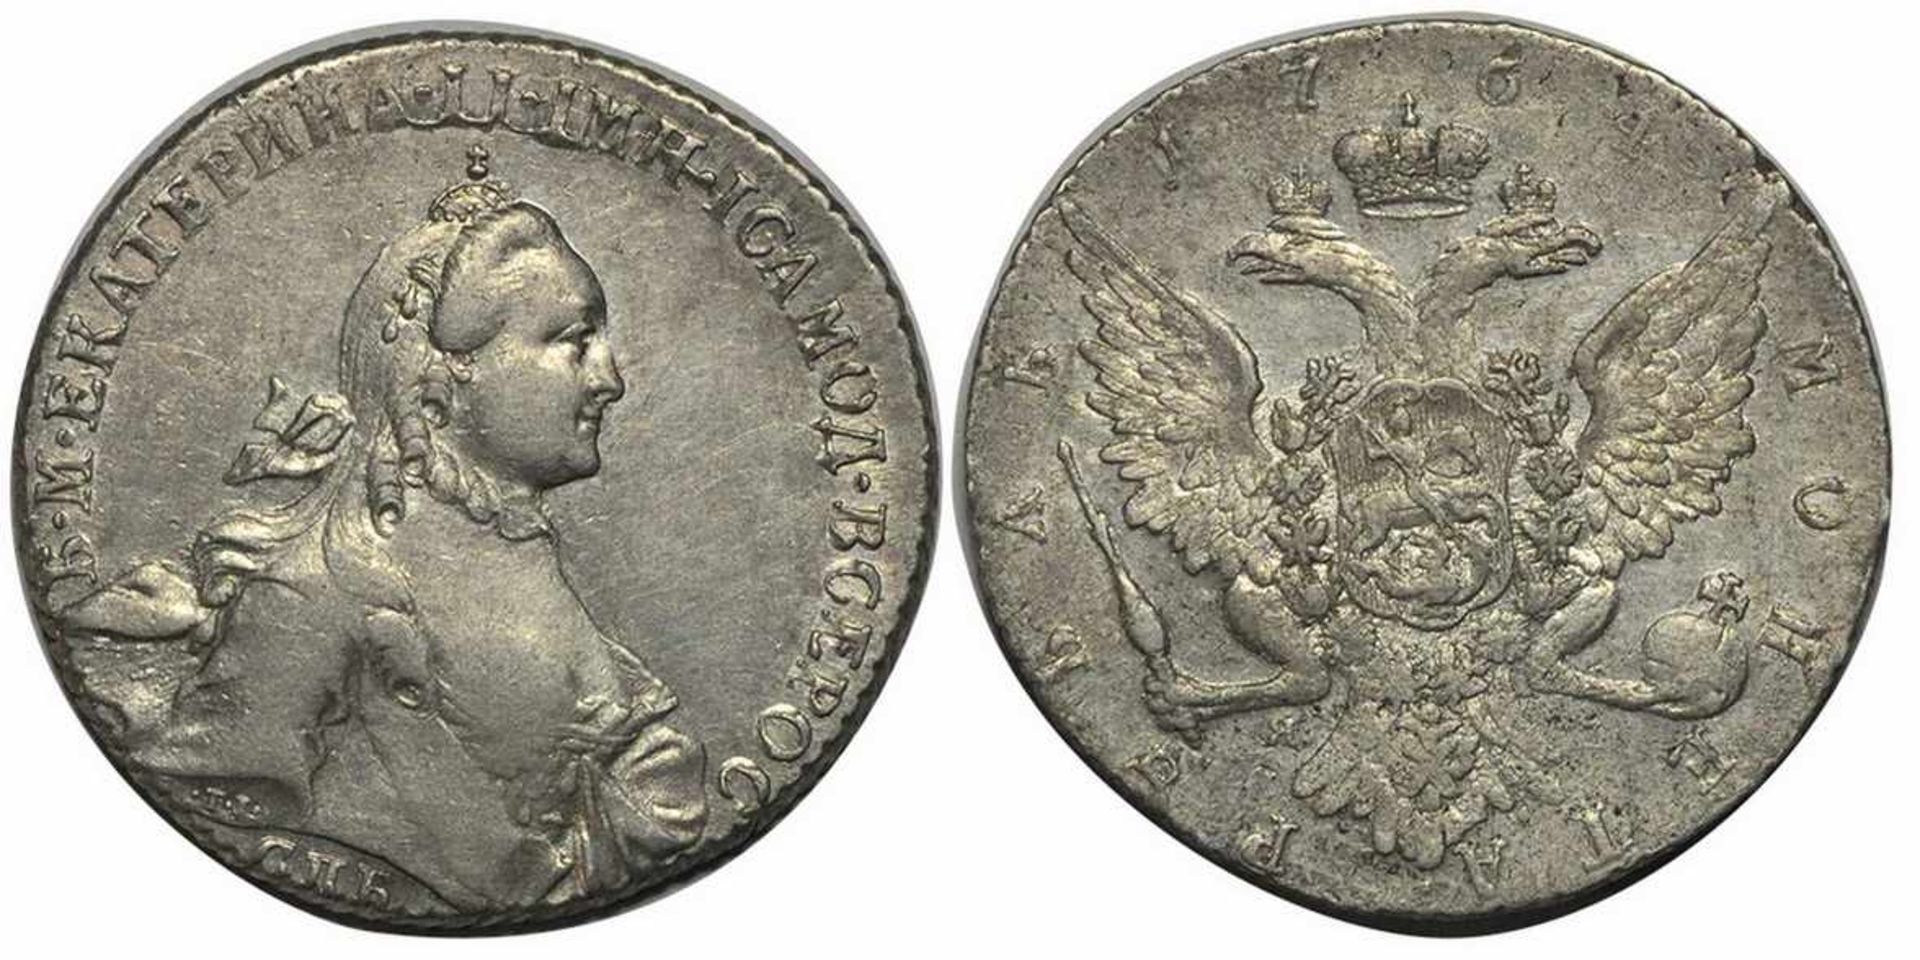 1 ruble 1764. Saint Petersburg Mint. "SPB-TI-YaI". Silver, 24,22 grams. Bitkin №185. Dyakov №50.